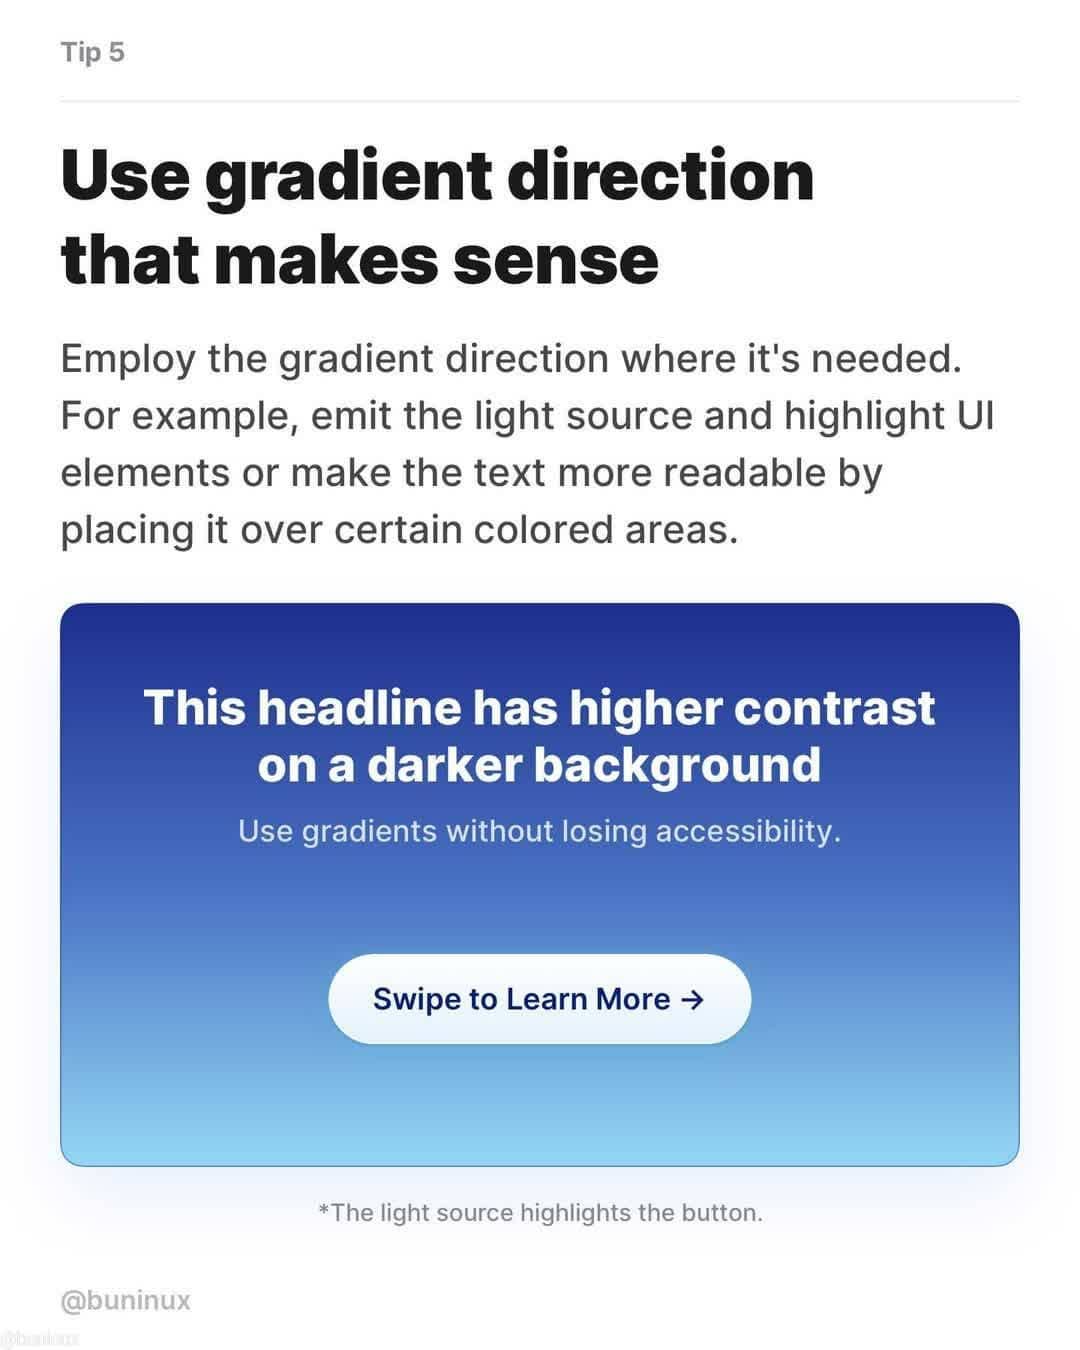 Tip 5 - Use gradient direction that makes sense